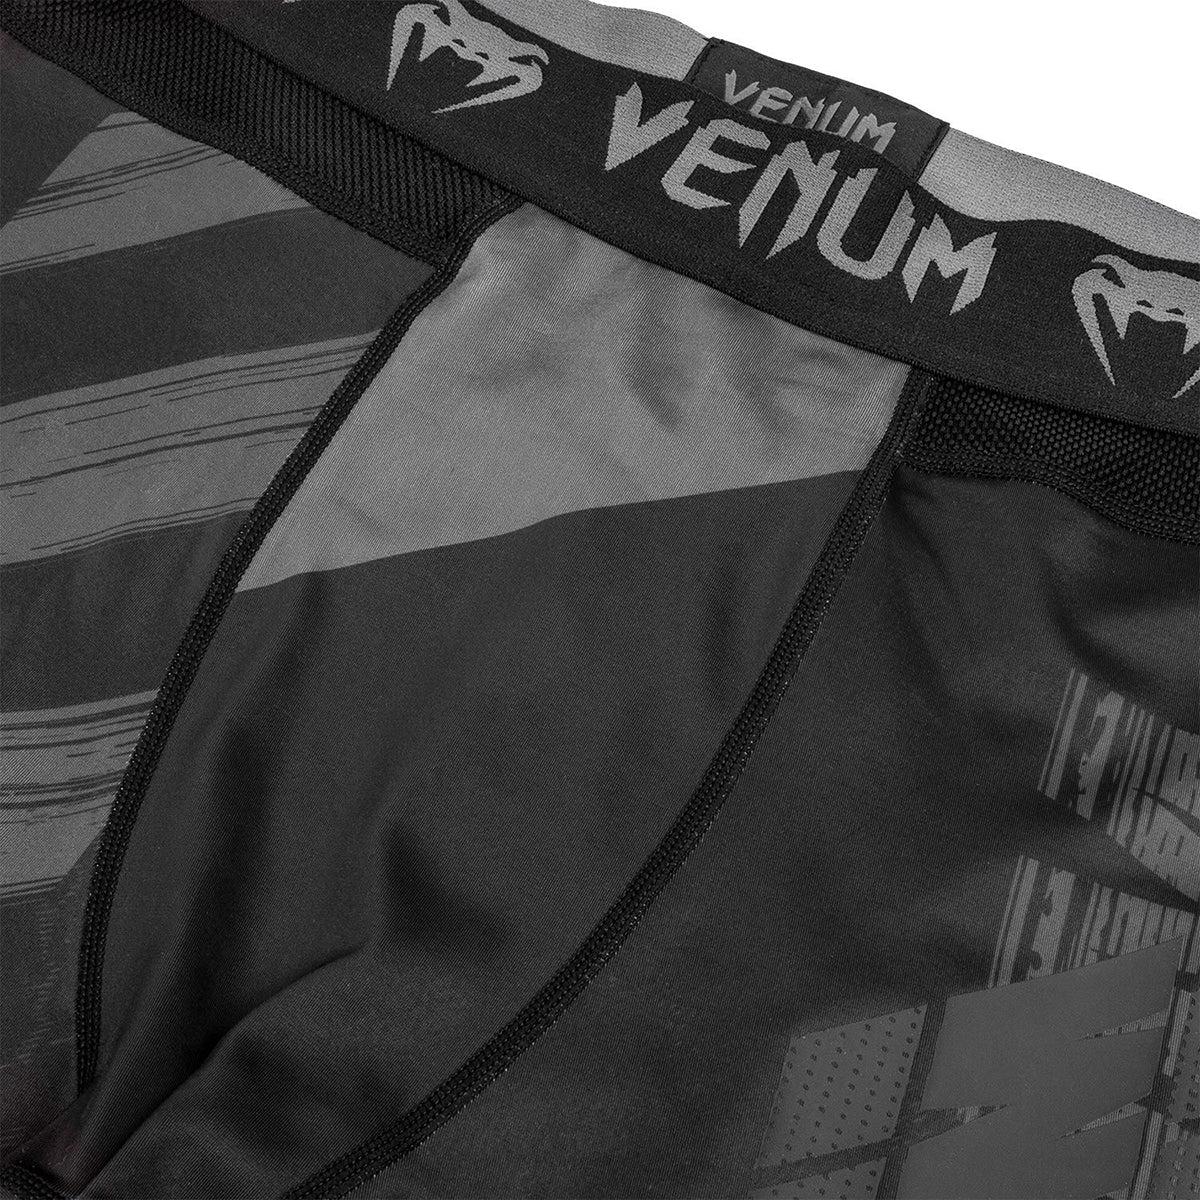 Venum AMRAP Compression Spats - Black/Gray Venum